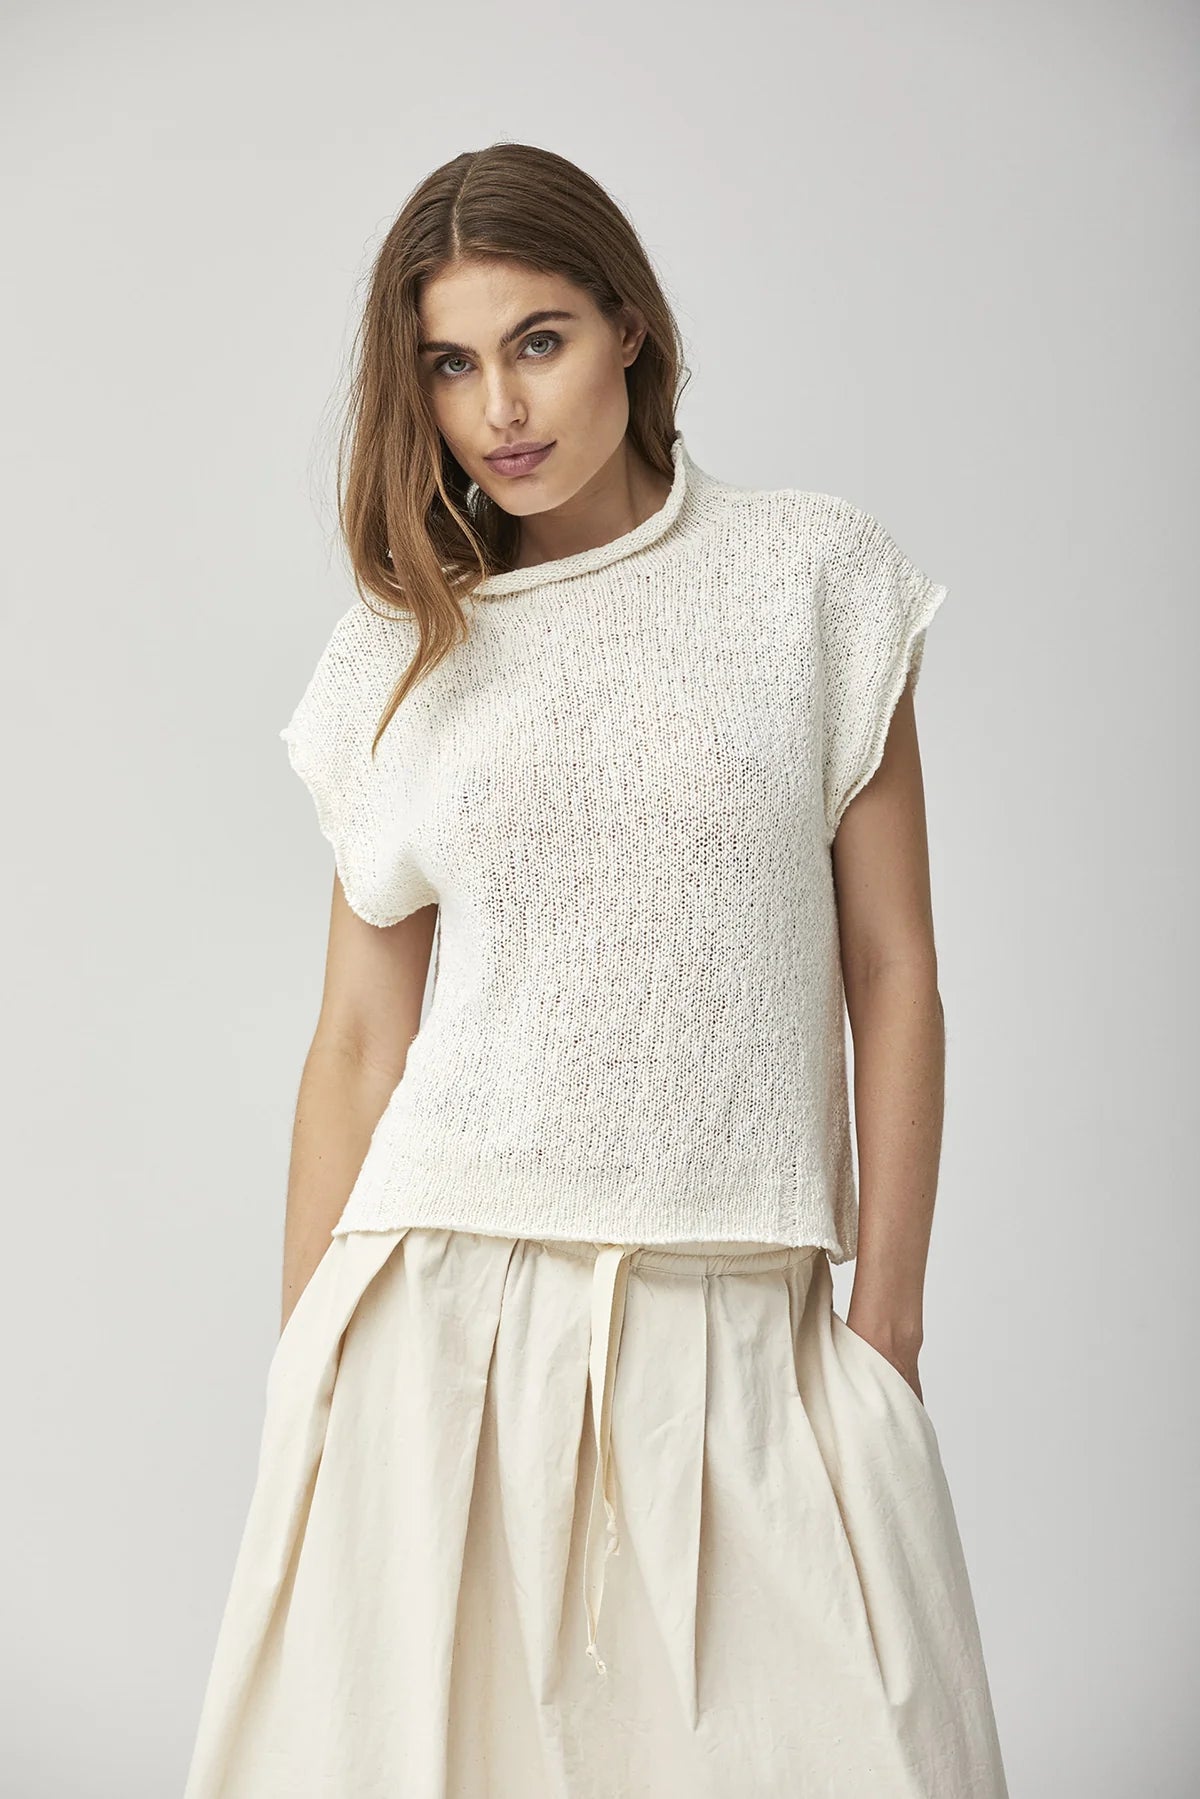 Kristensen Du Nord - Recycled Cotton Skirt in Natural